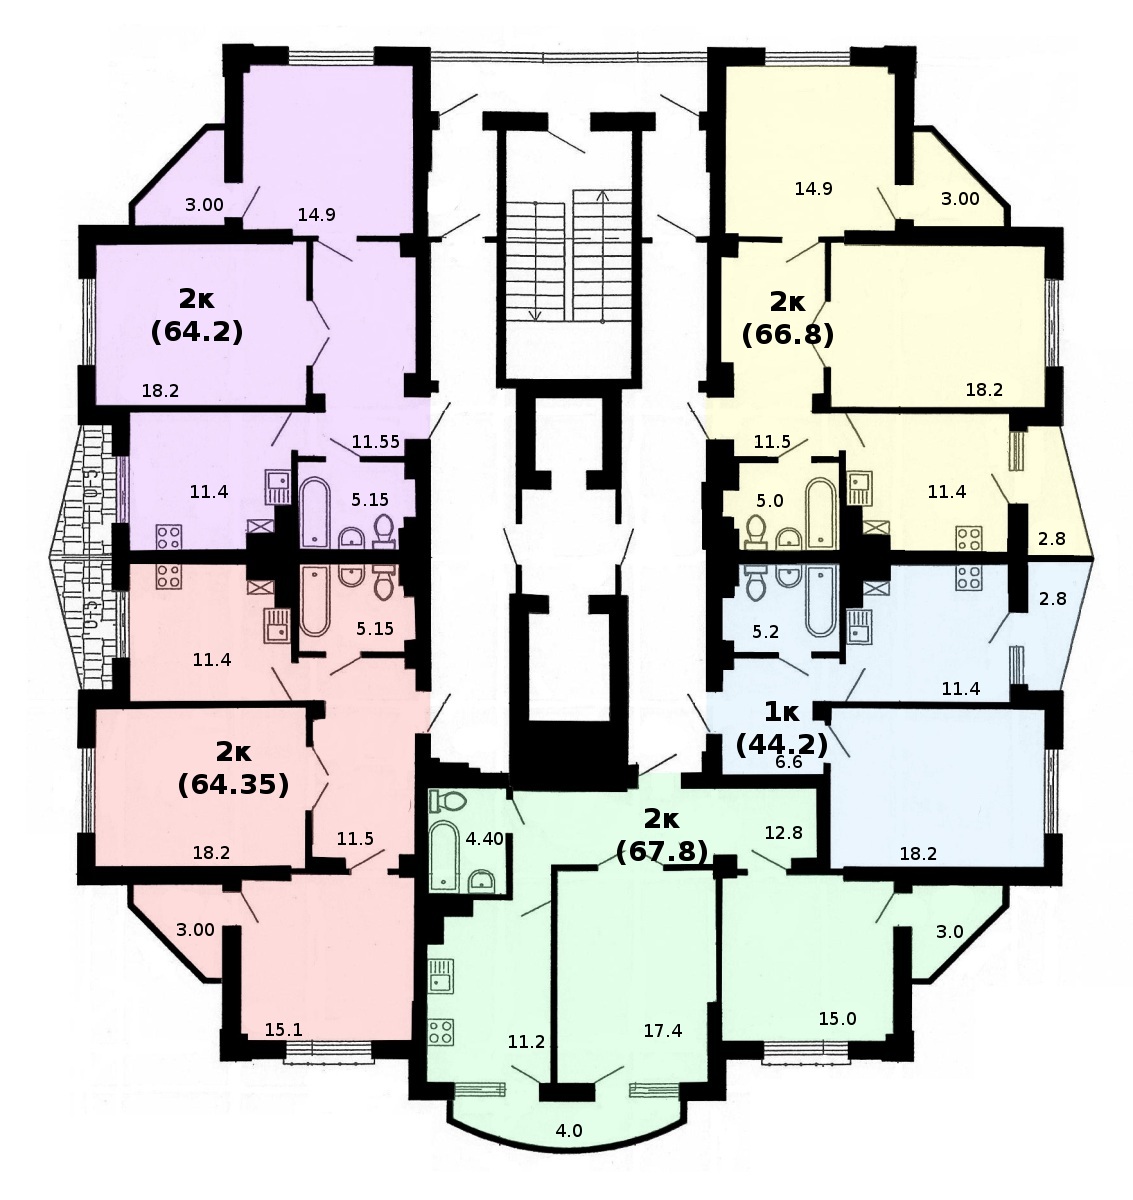 фото план этажа